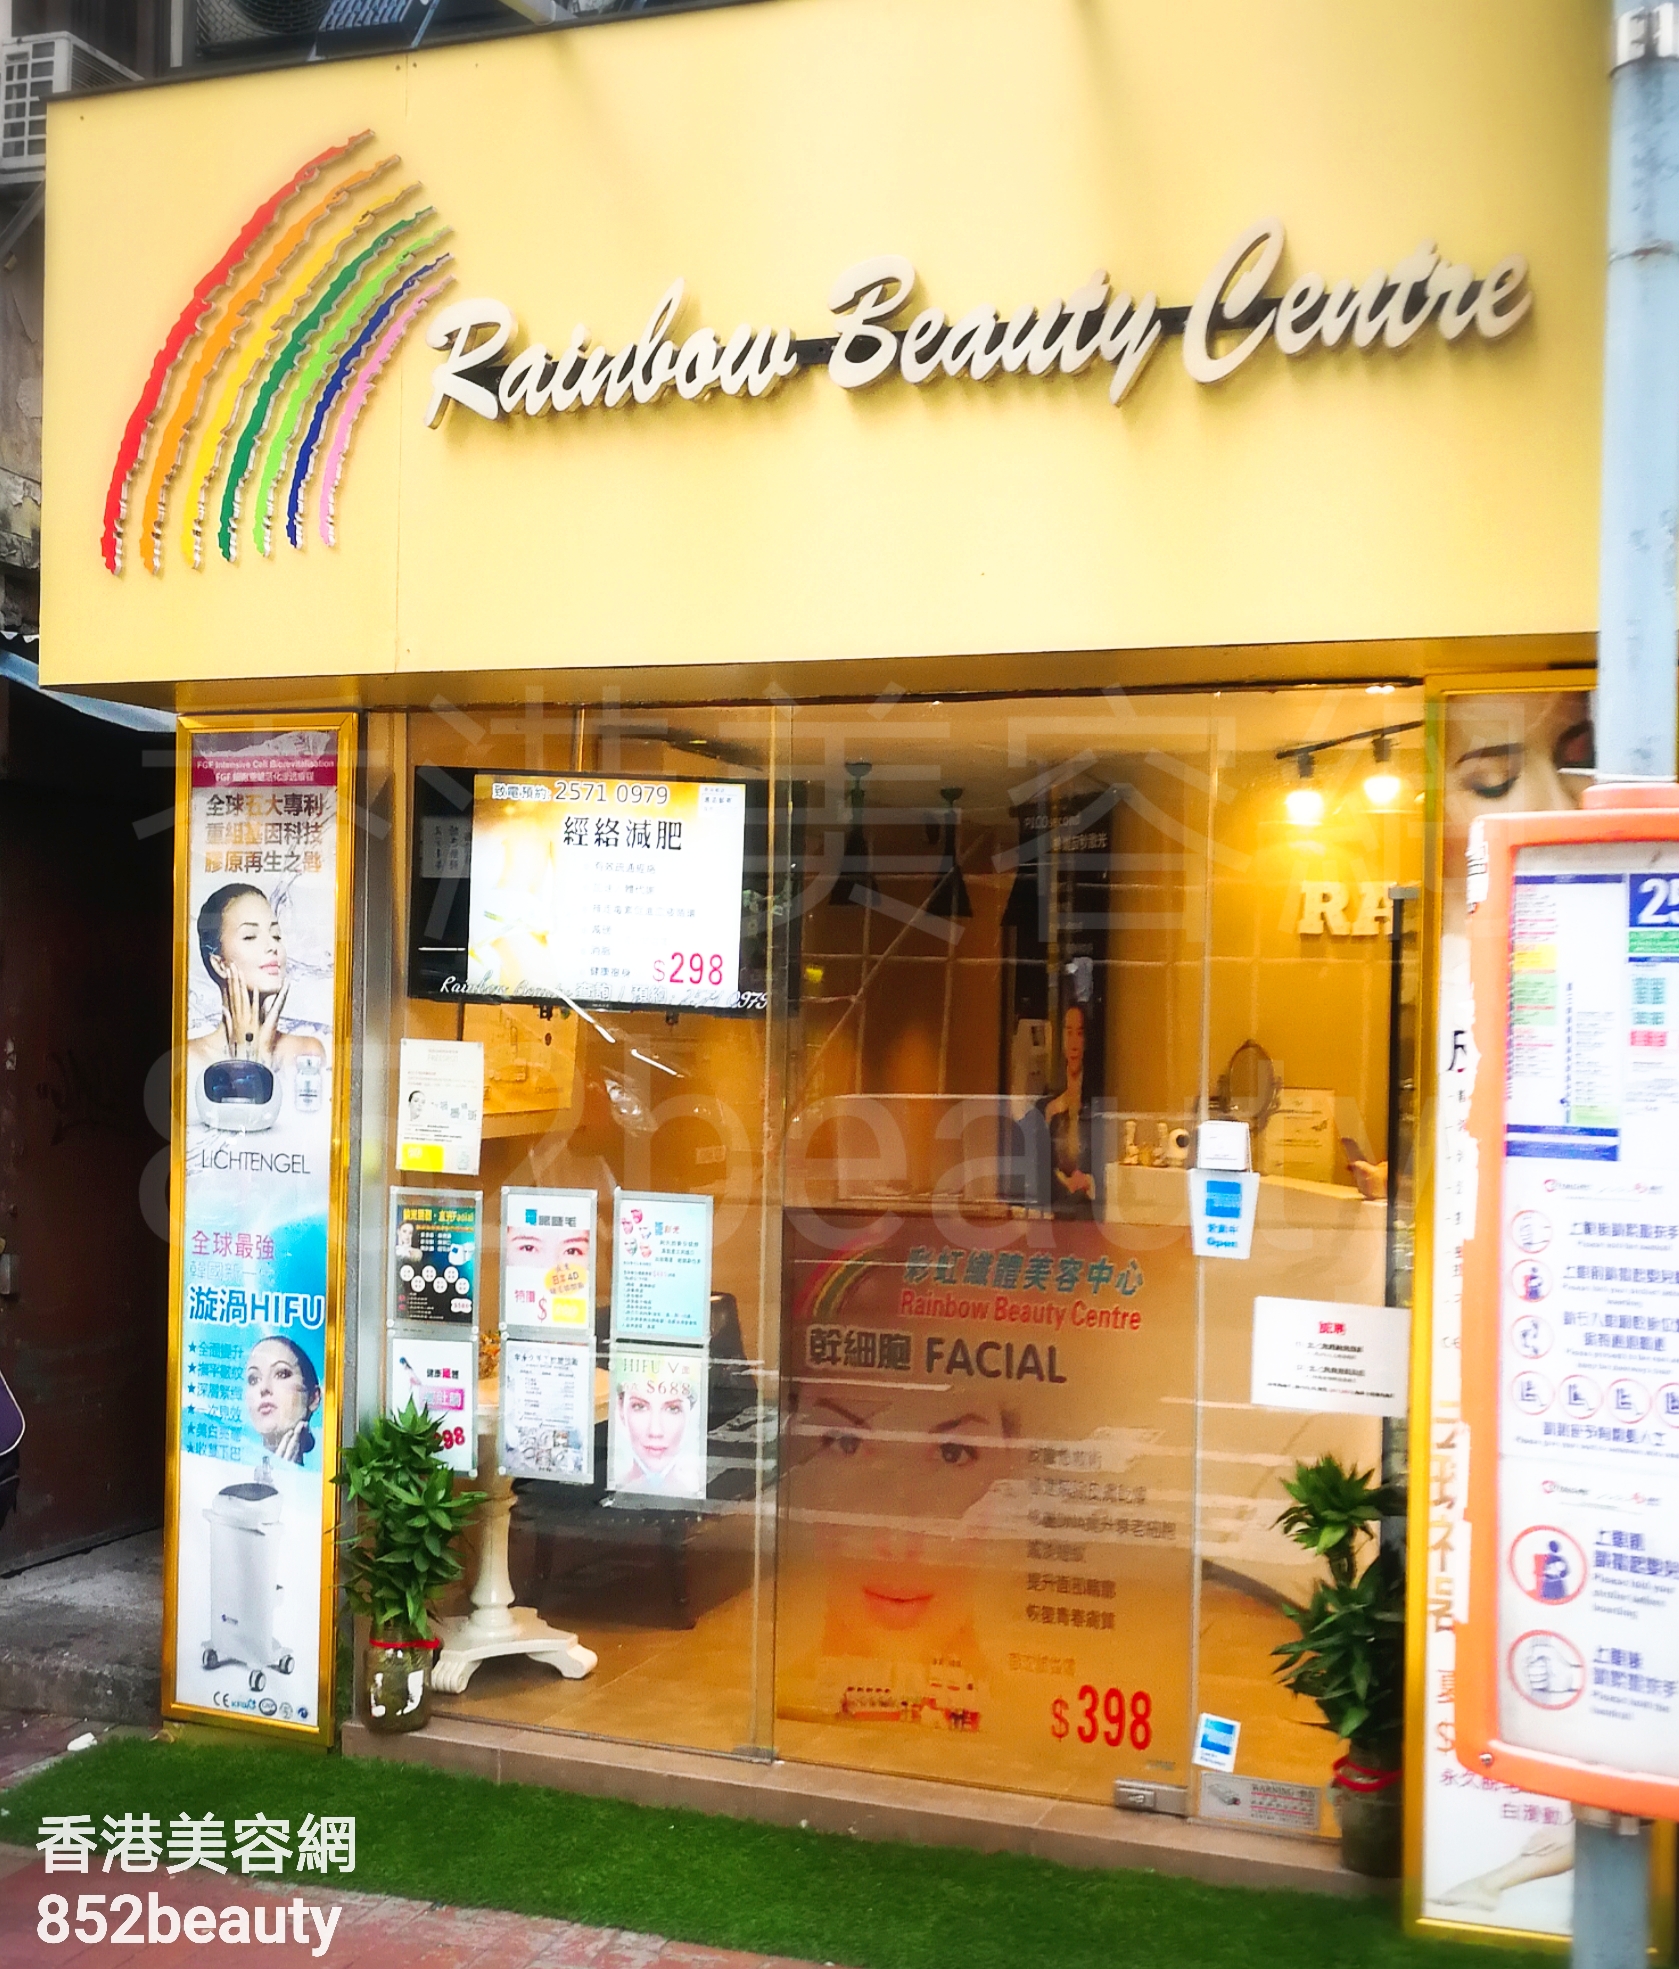 Facial Care: Rainbow Beauty Centre